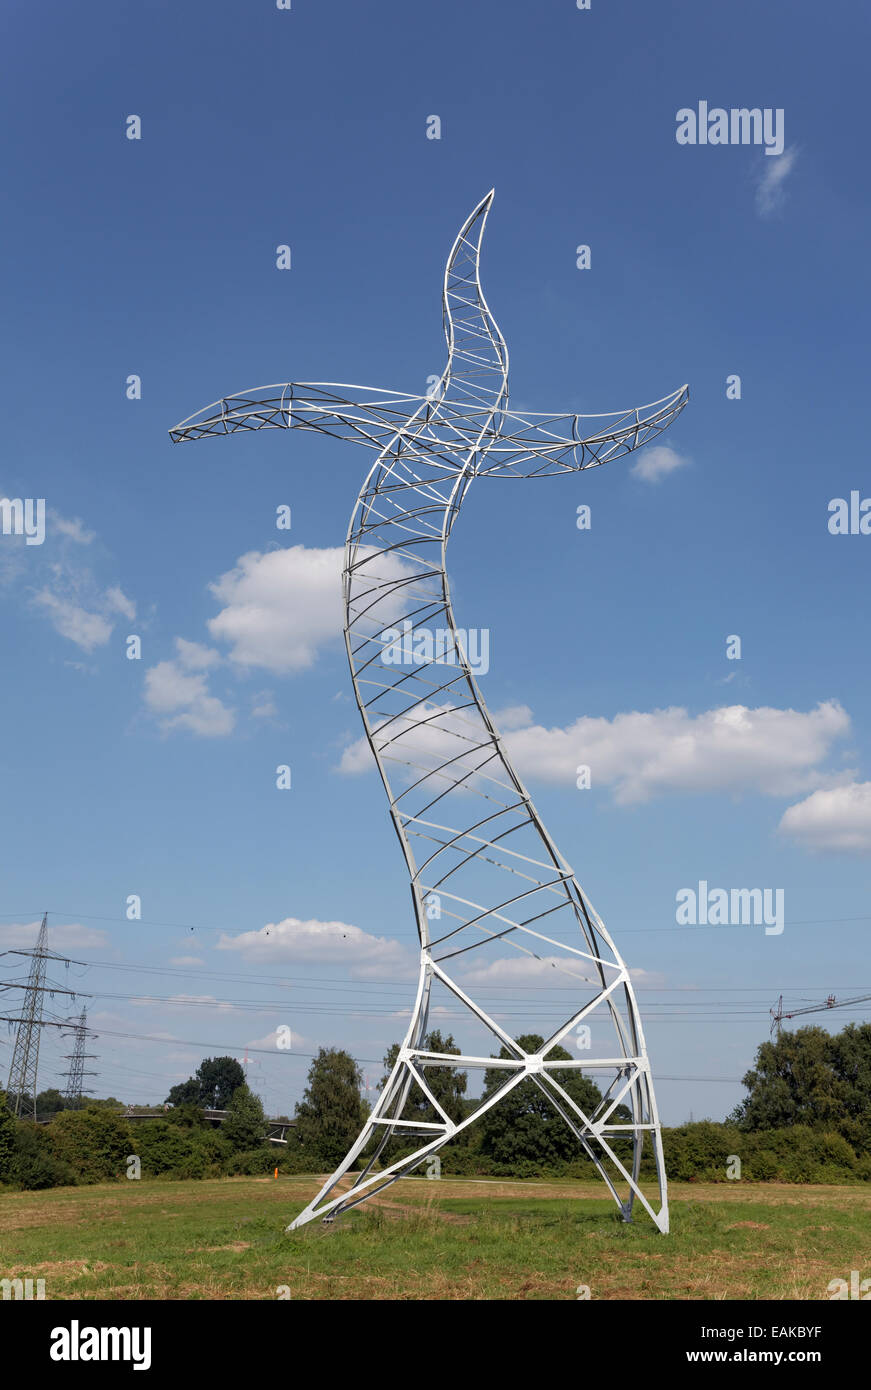 Dancing electricity pylon, Sculpture "Zauberlehrling", German for "Sorcerer’s Apprentice" created by Kuenstlergruppe Inges Stock Photo